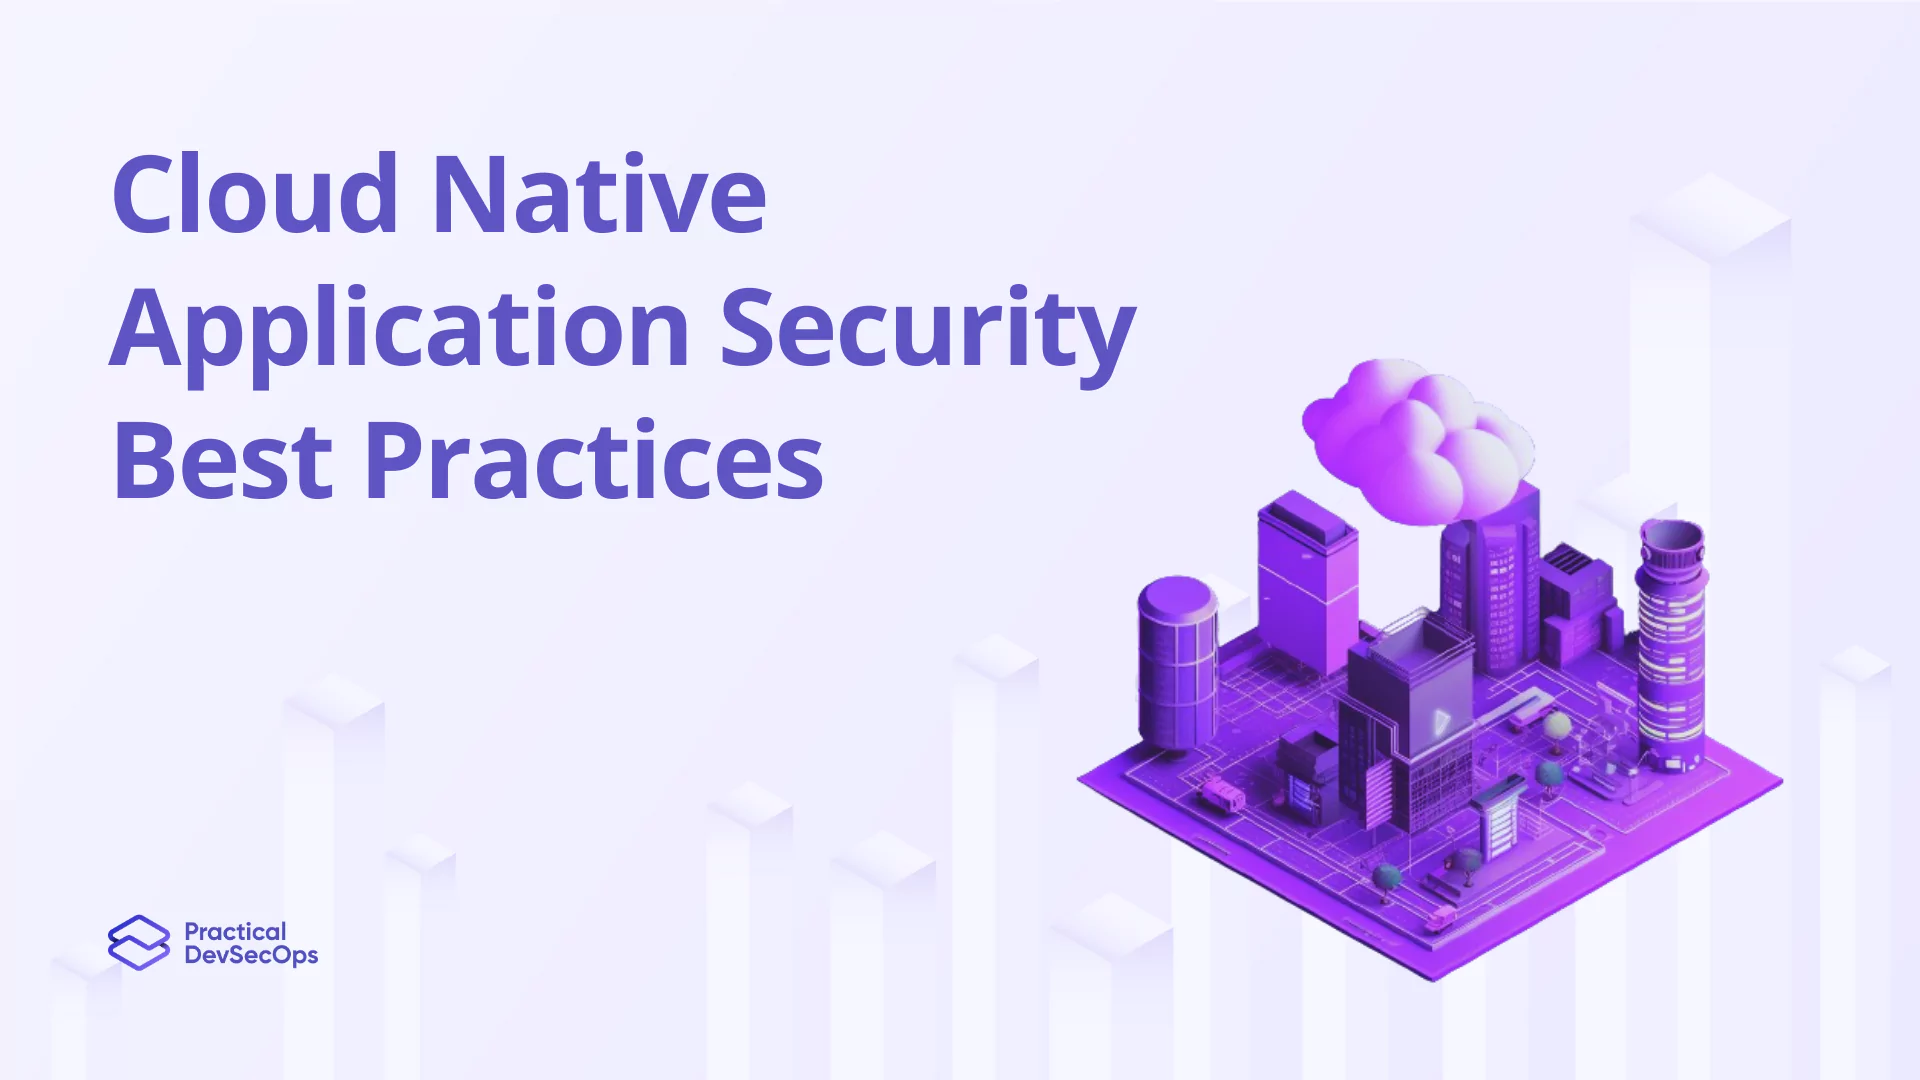 Cloud Native Application Security Best Practices